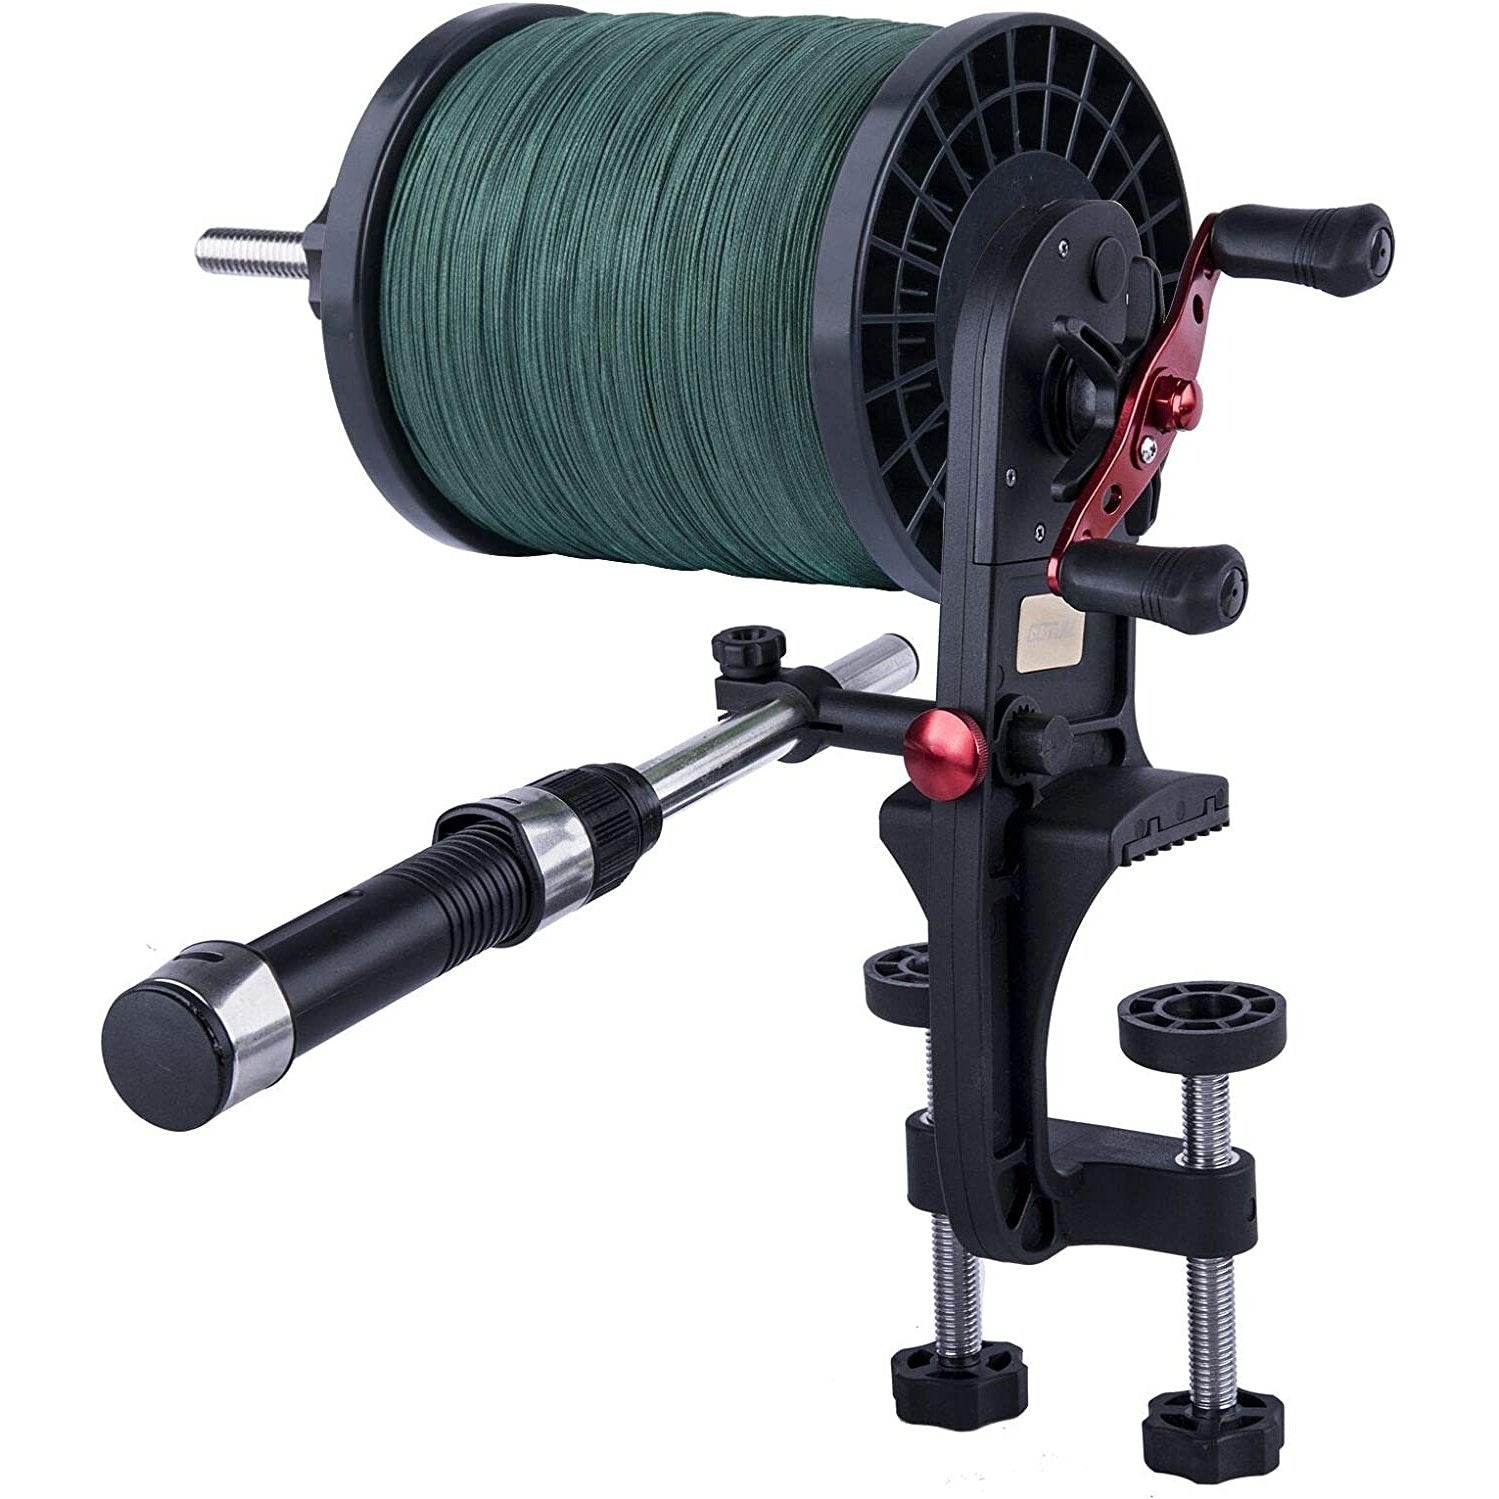 New Portable Fishing Line Winder Reel Spool Spooler Machine